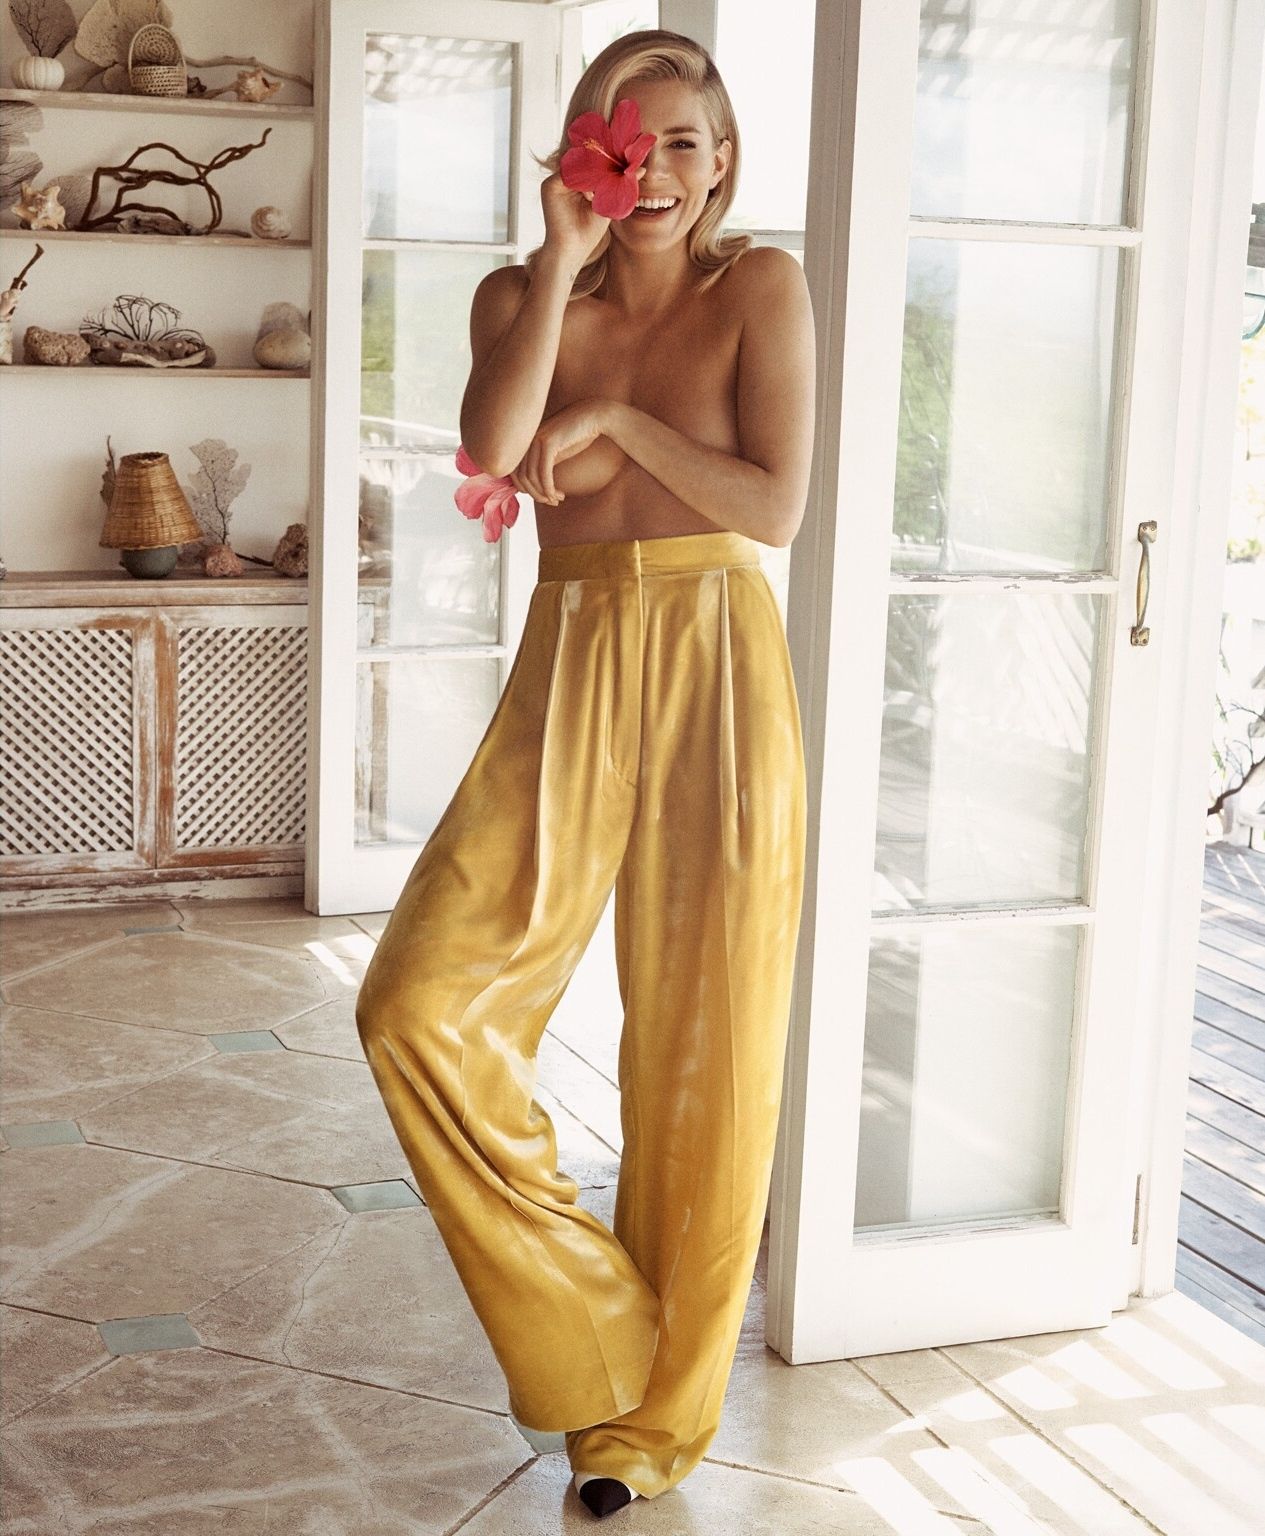 Topless Photos of Sienna Miller